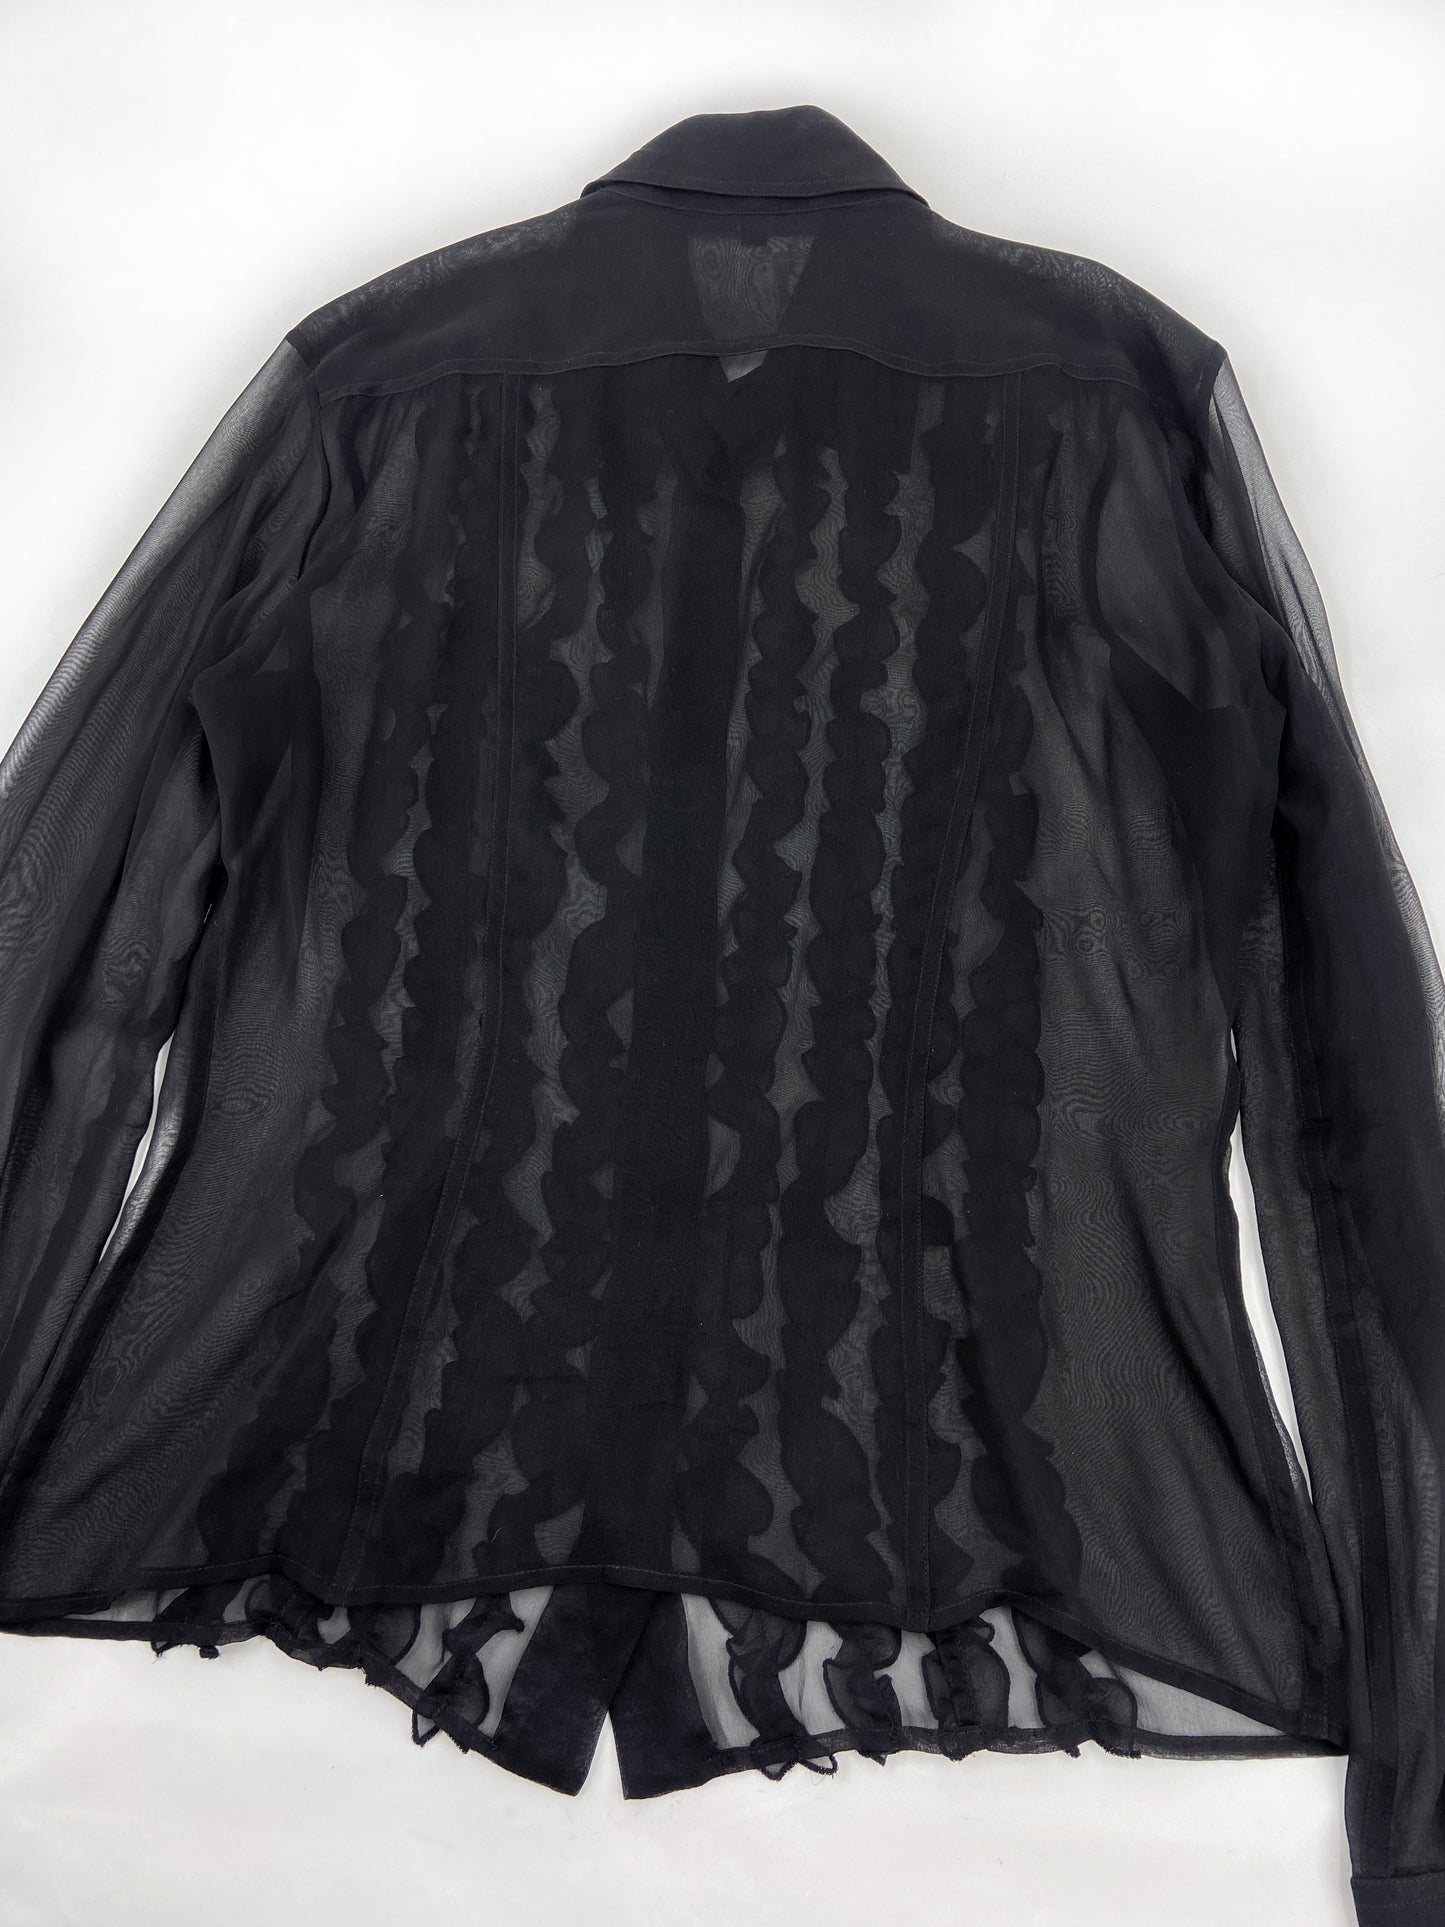 Gucci Spring 1999 Tom Ford Daisey Fuentes Ruffled Silk Sheer Dress Shirt 40